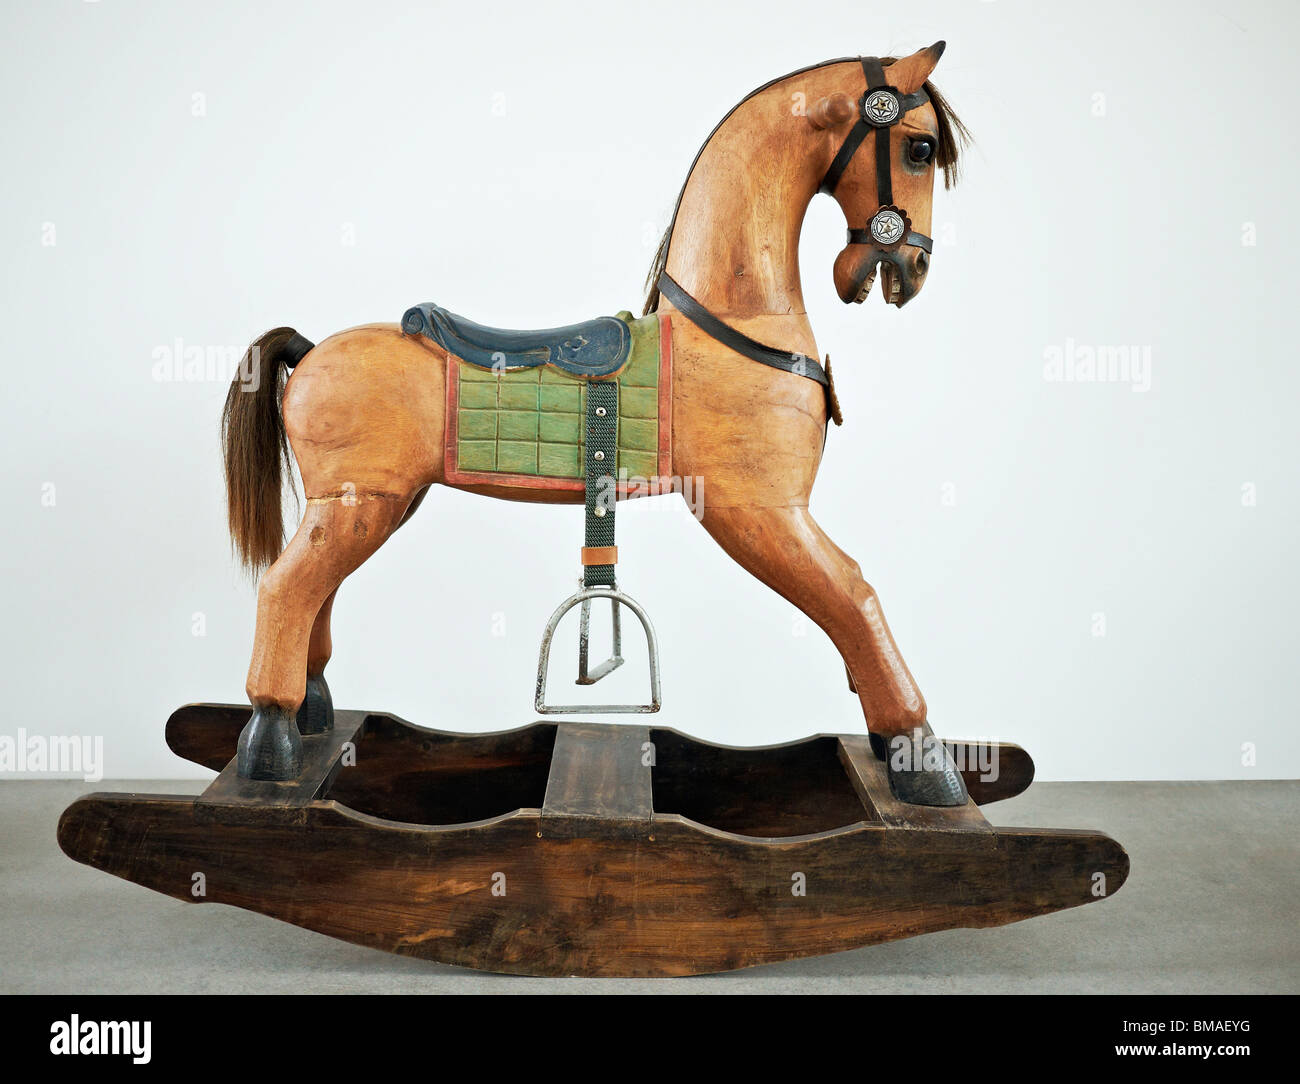 Rocking horse. Old wooden antique rocking horse Stock Photo